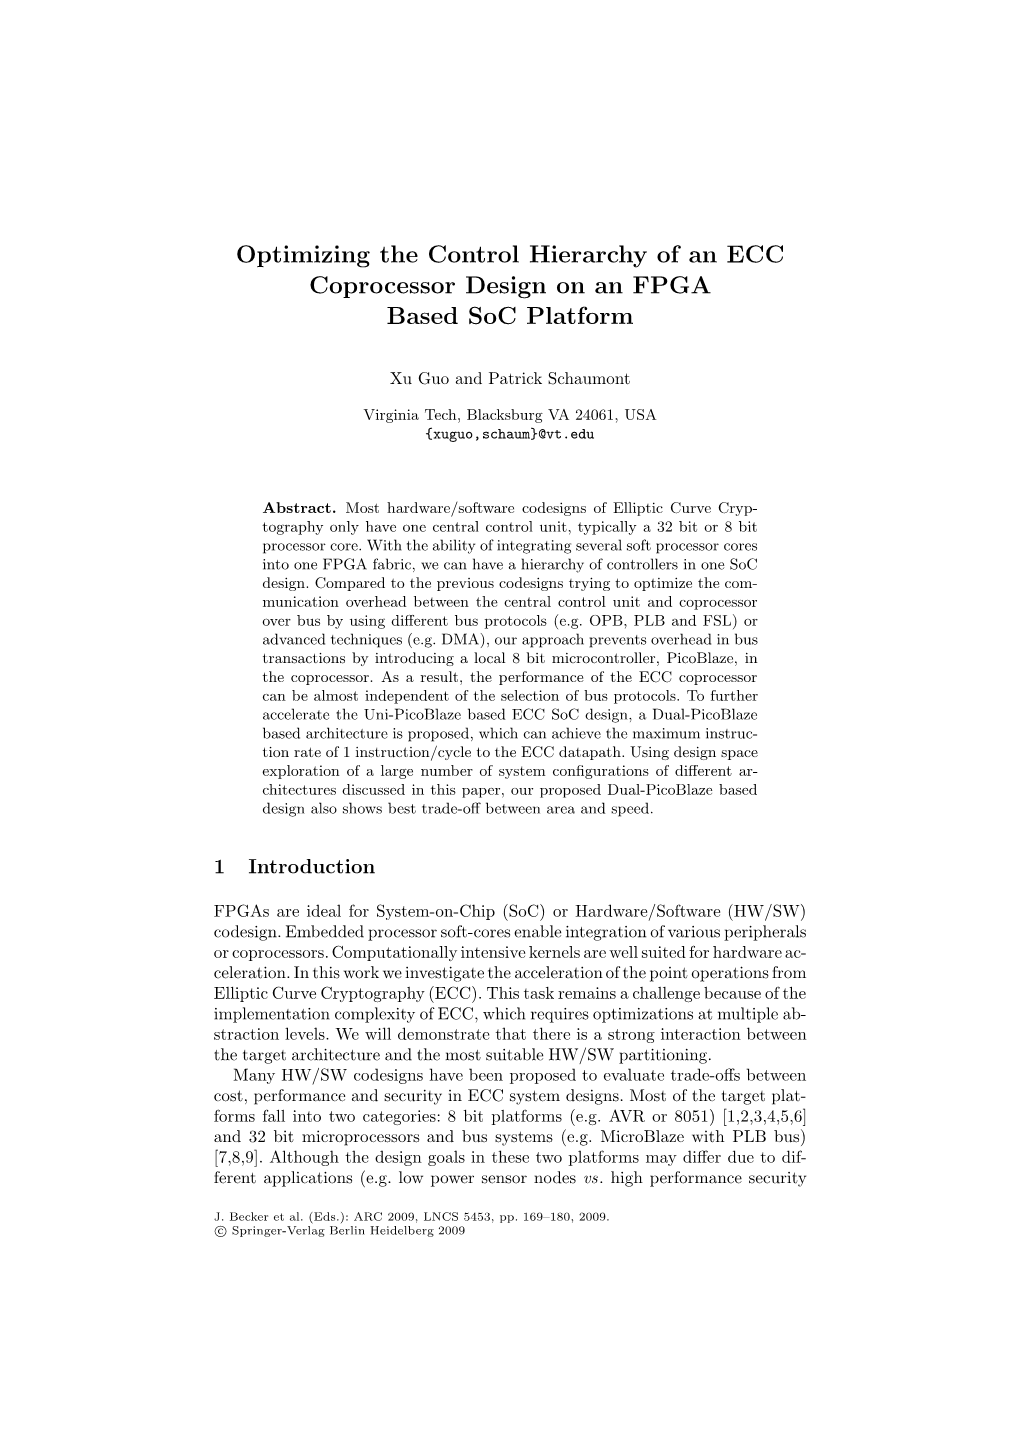 Optimizing the Control Hierarchy of an ECC Coprocessor Design on an FPGA Based Soc Platform